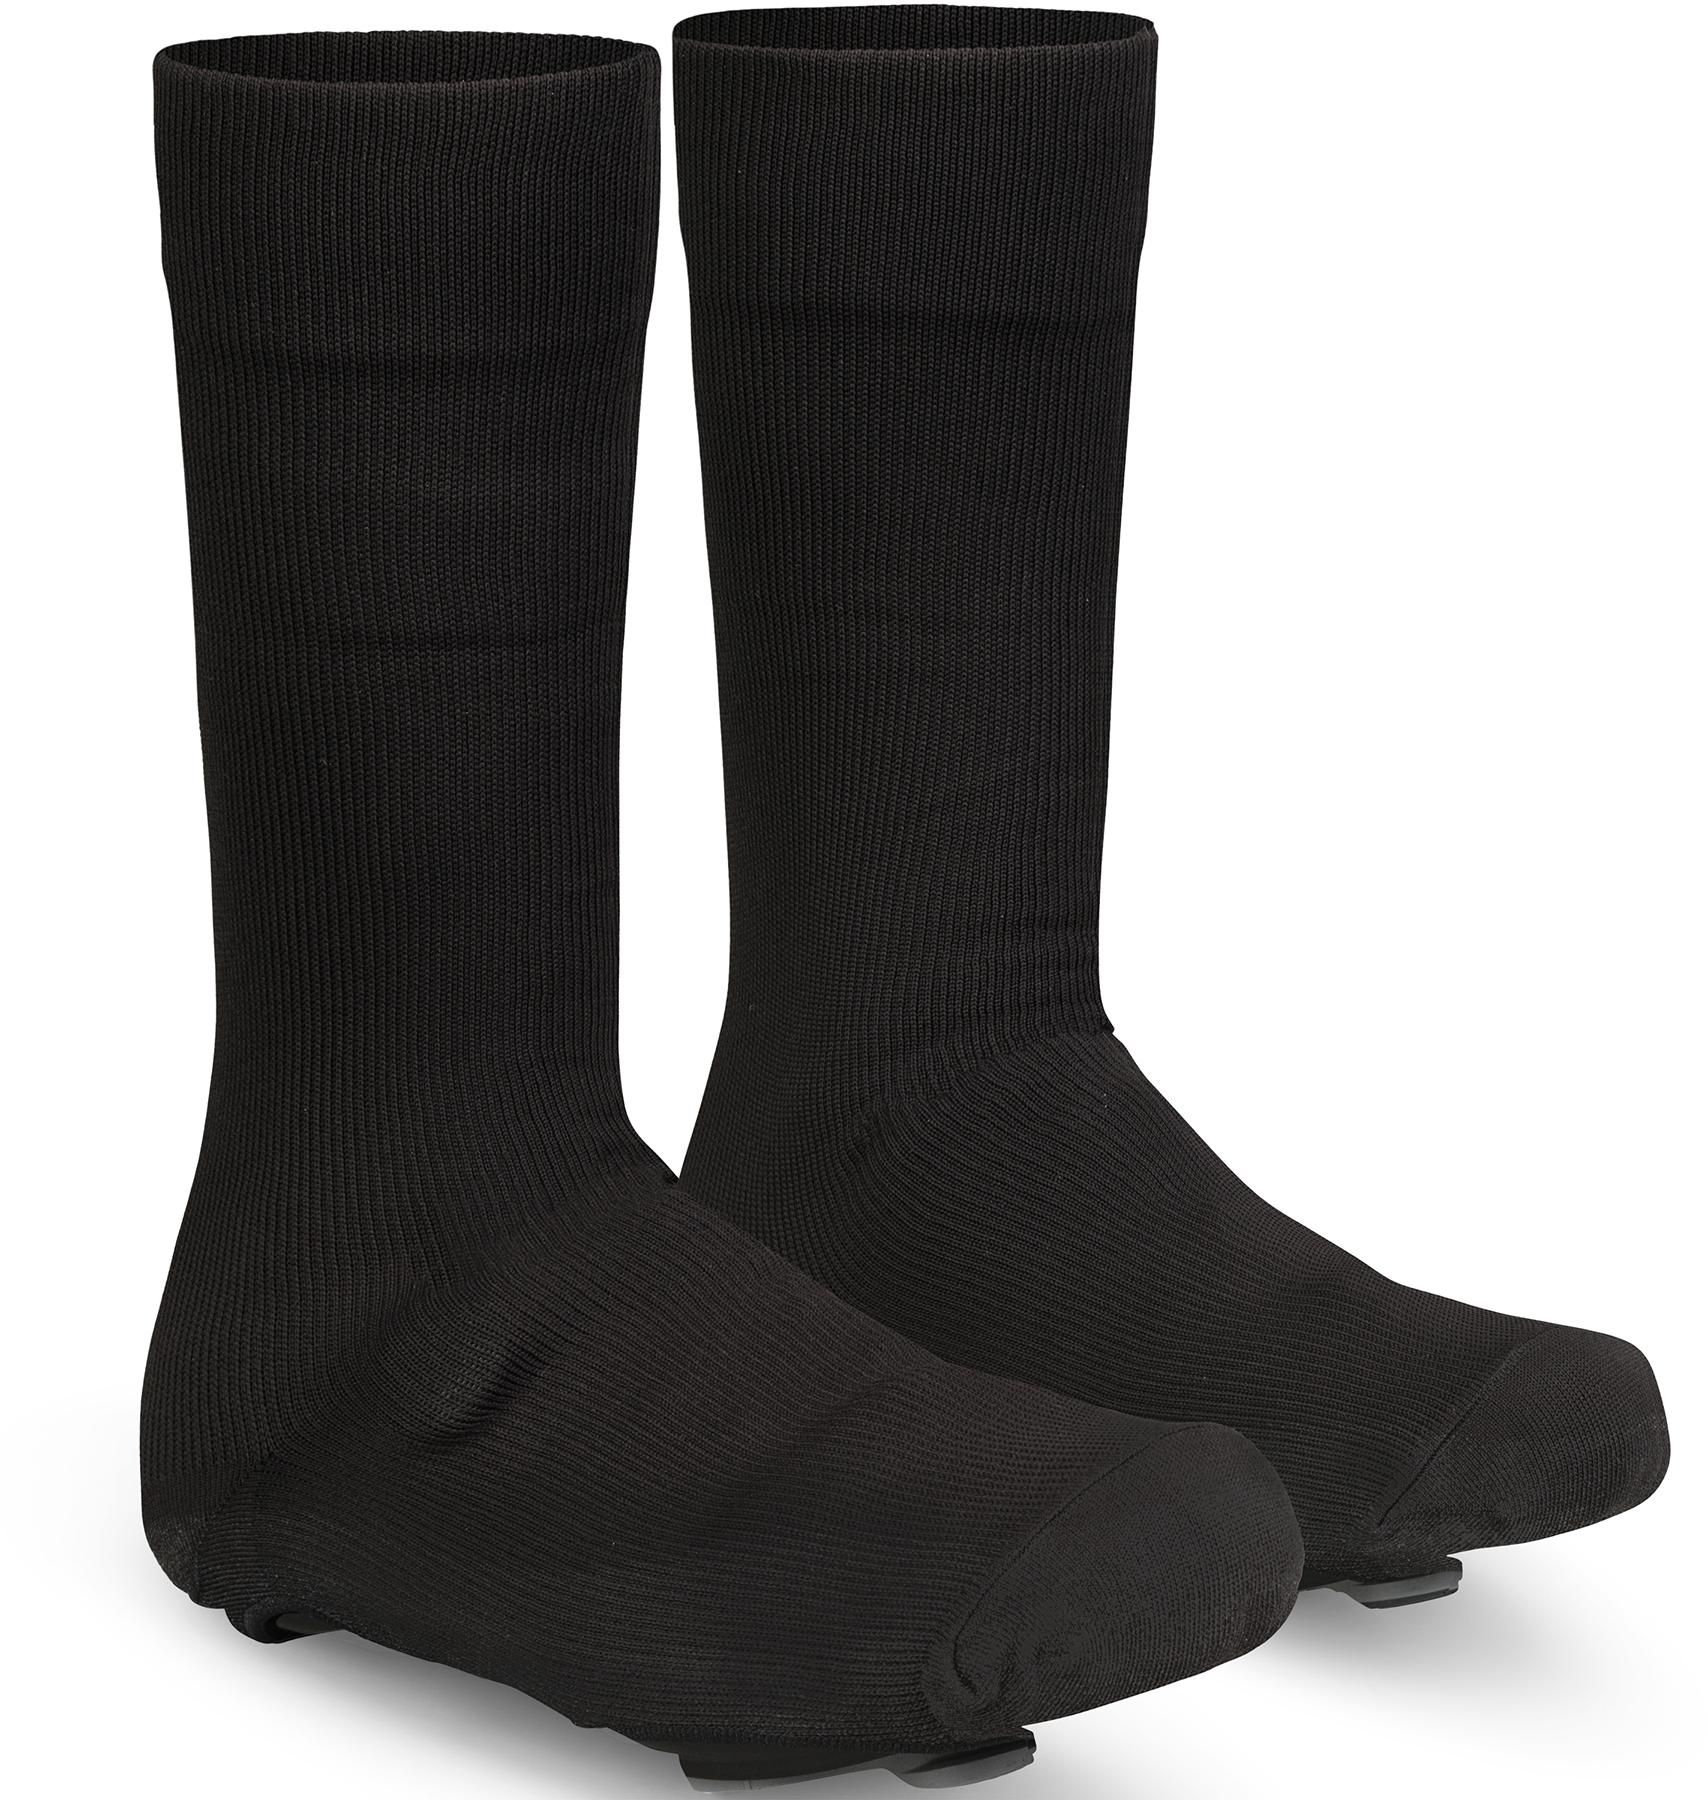 Gripgrab Flandrien Waterproof Knitted Road Shoe Covers - Black